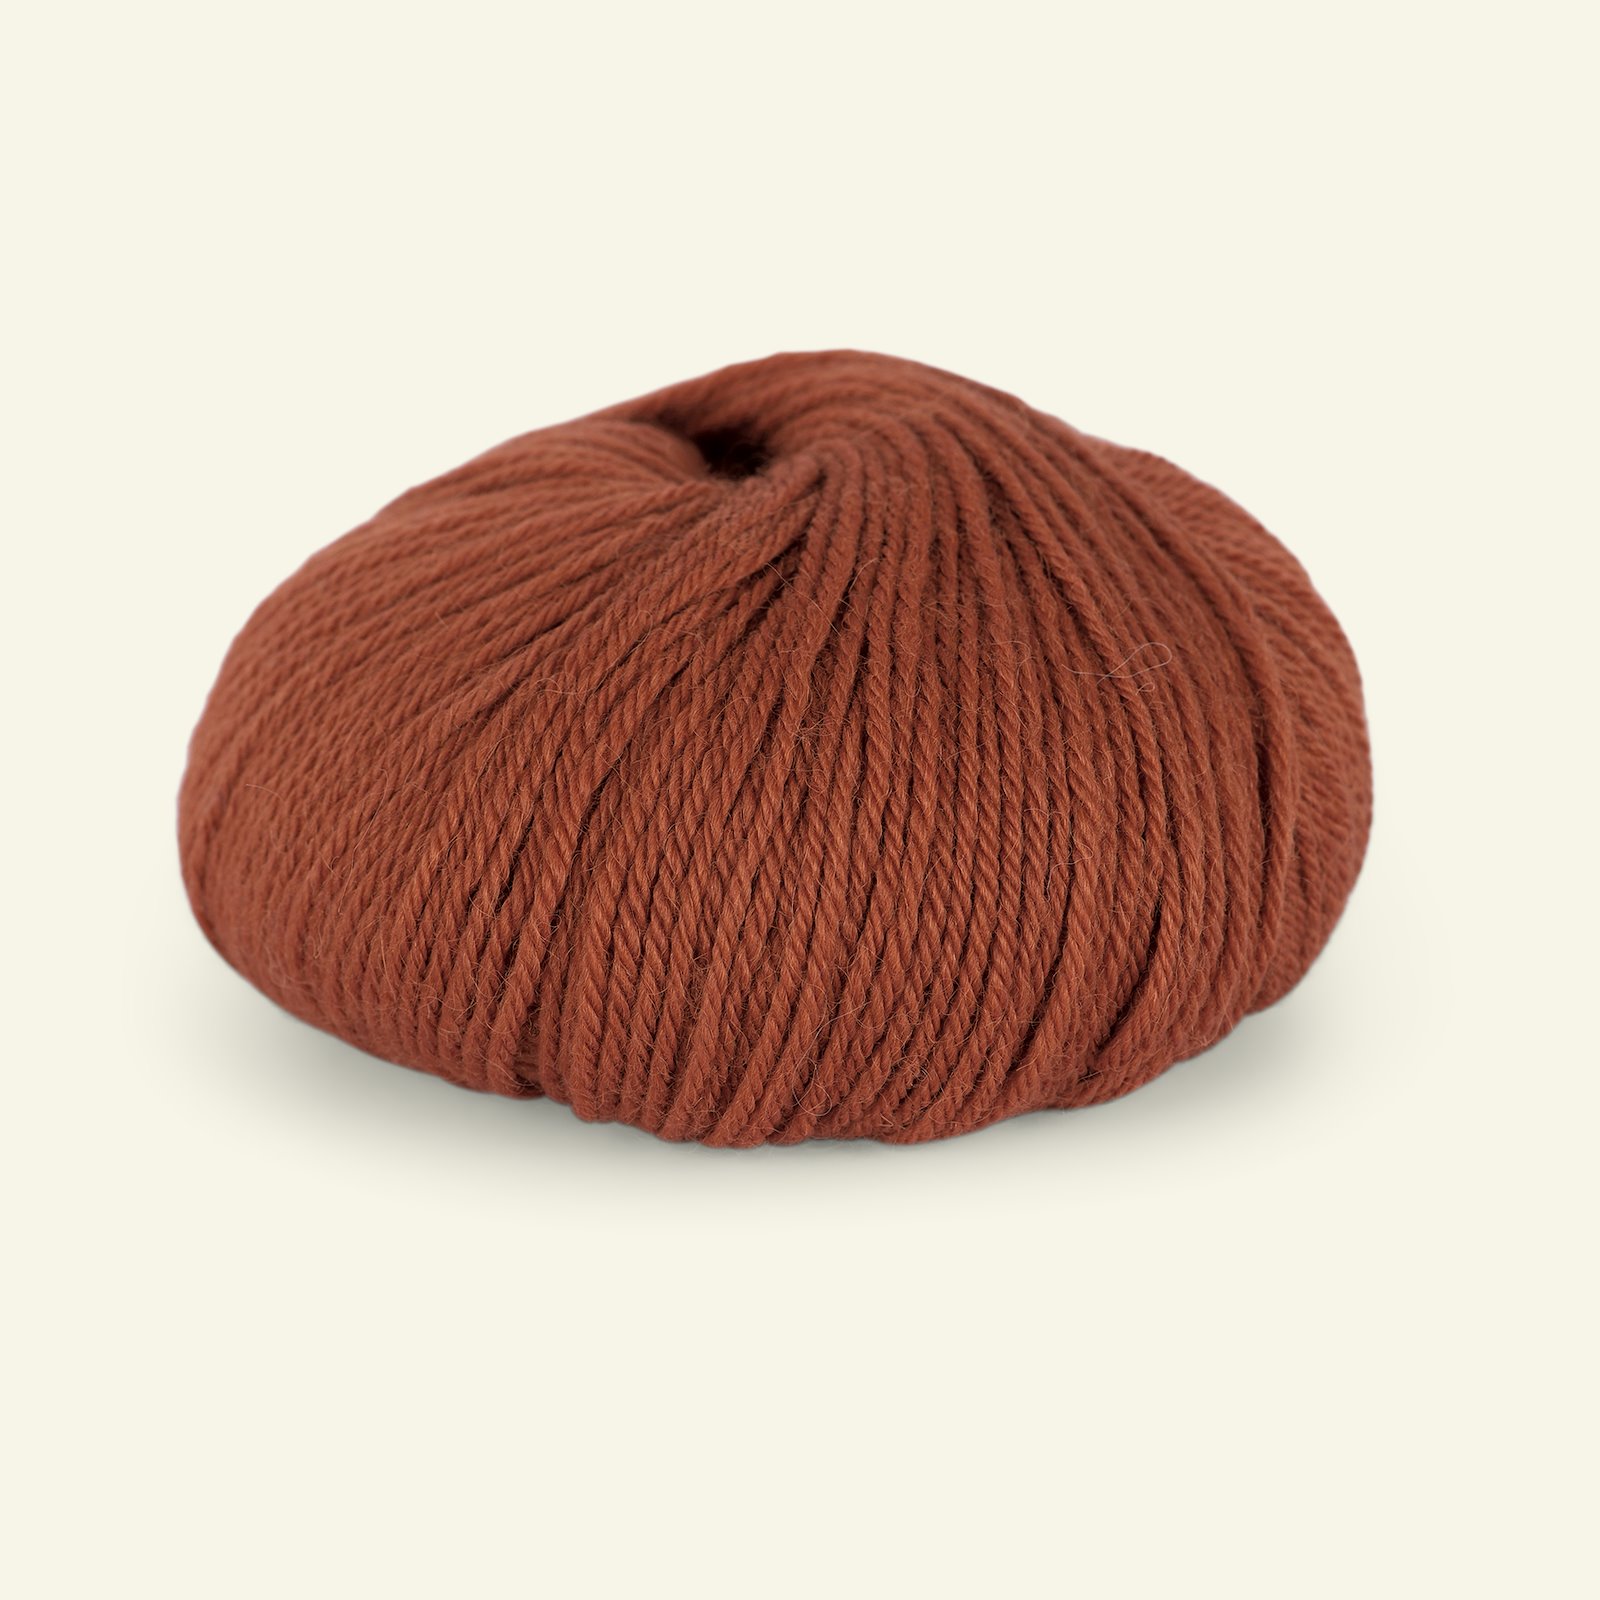 Du Store Alpakka, alpaca merino mixed yarn "Sterk", golden brown (862) 90000684_pack_b